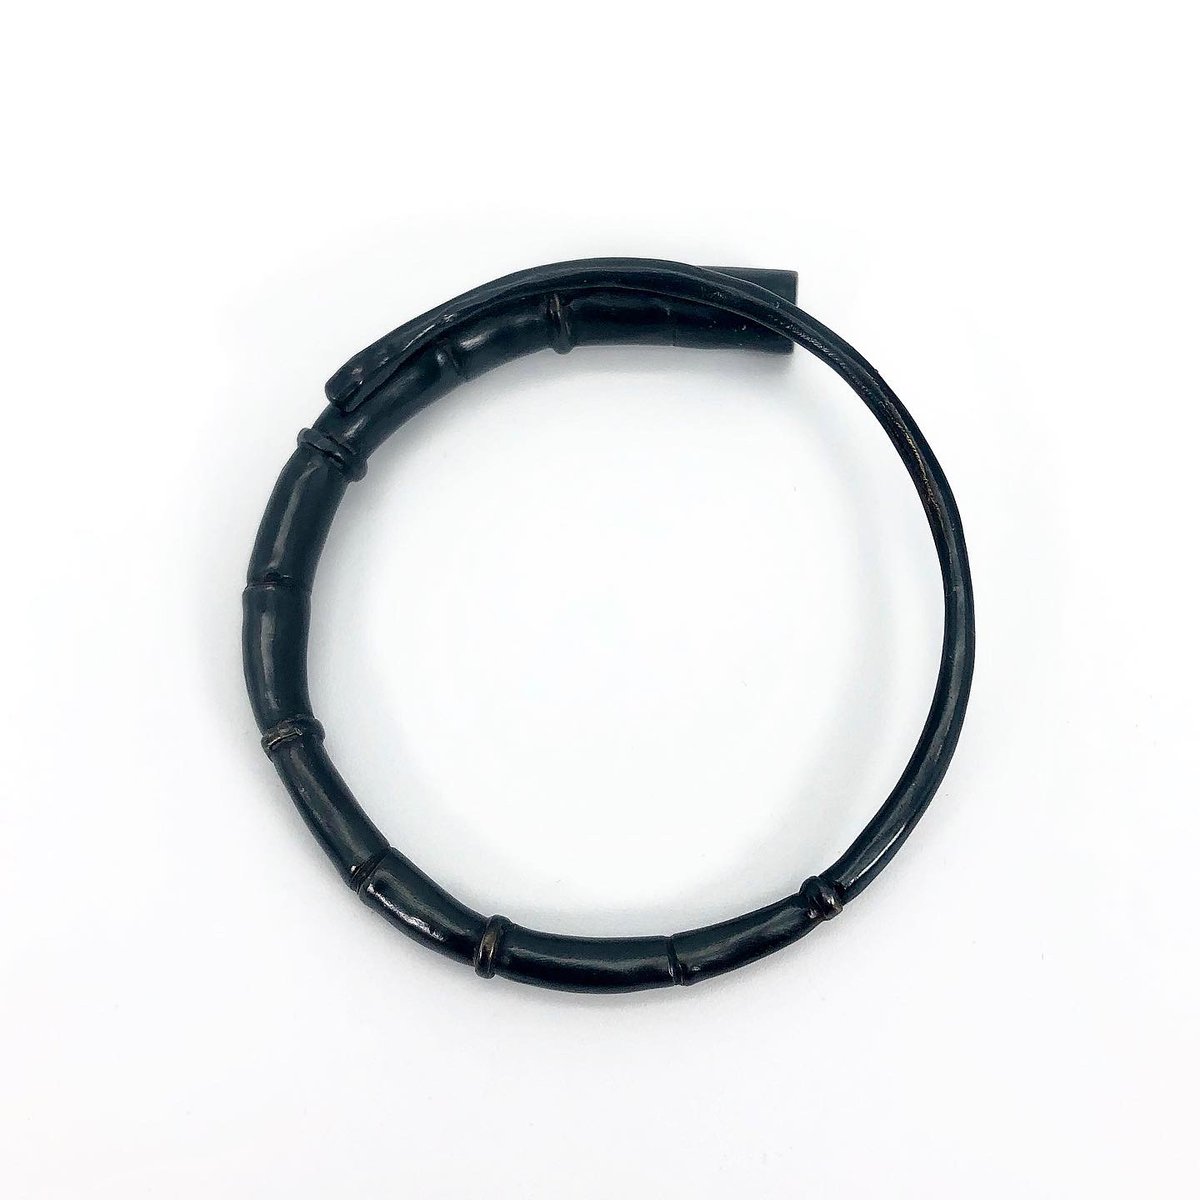 Image of Black Tendril Bangle Bracelet 09